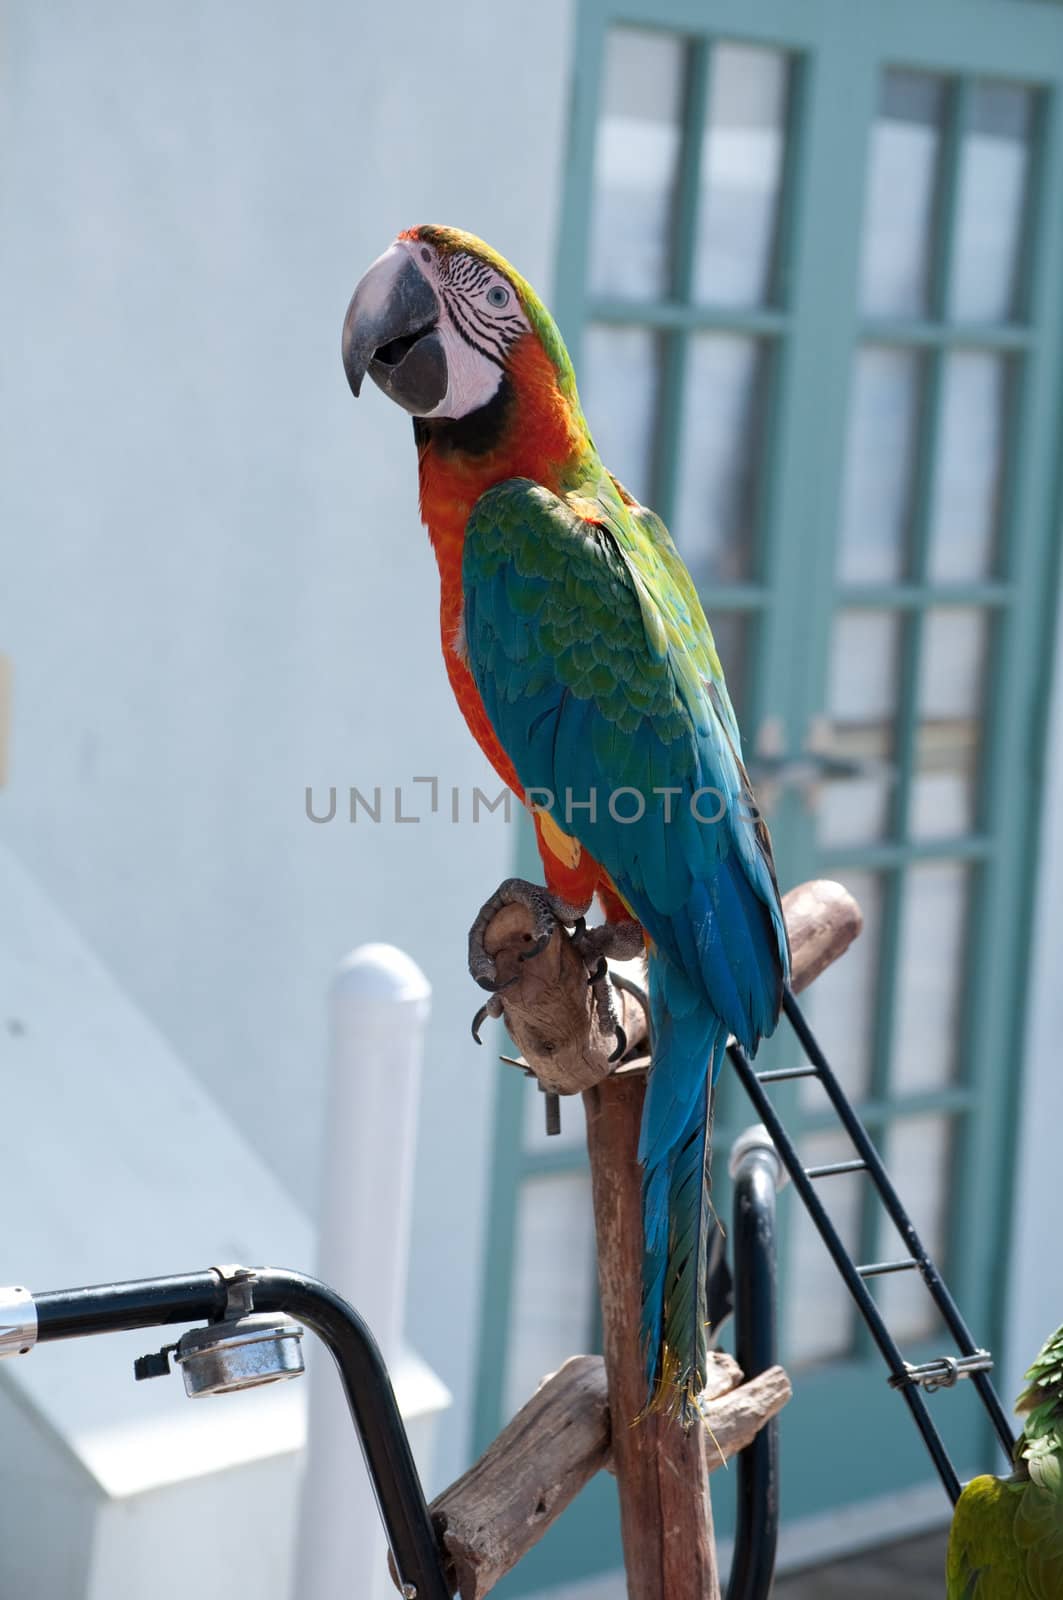 Beautiful colorful pet bird with companion on display